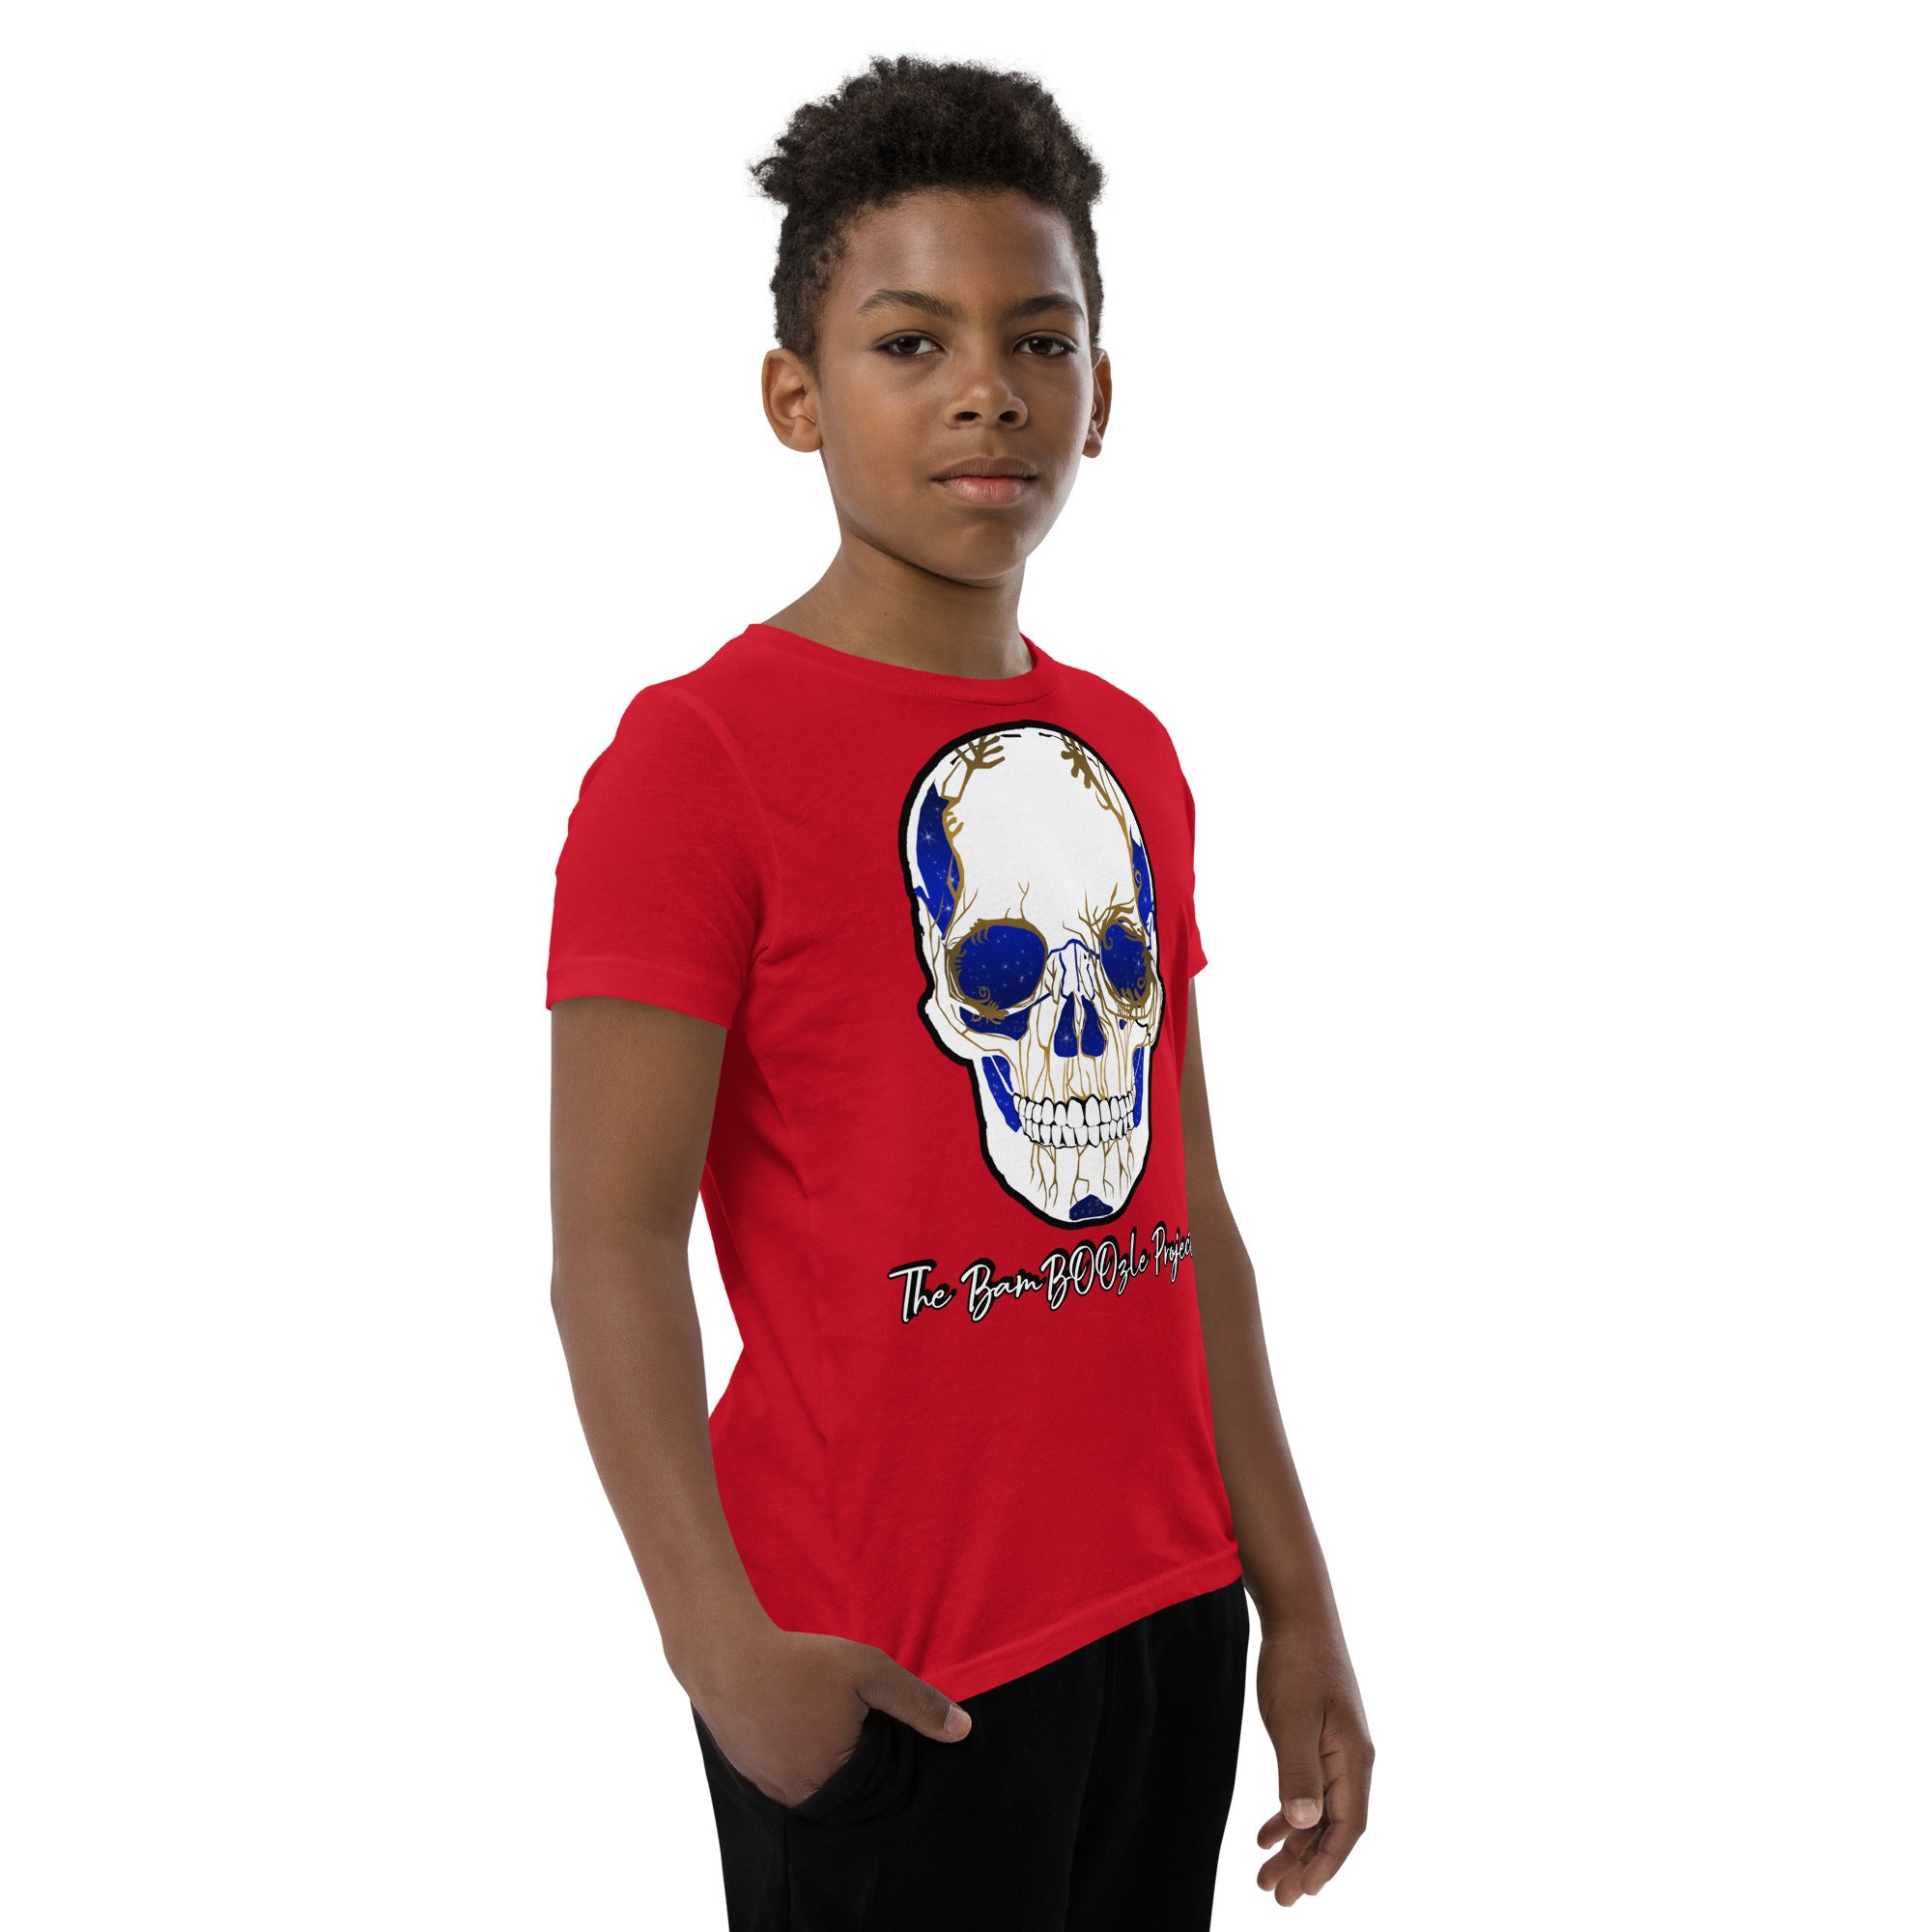 Electric Sugar Skull Youth Short Sleeve T-Shirt